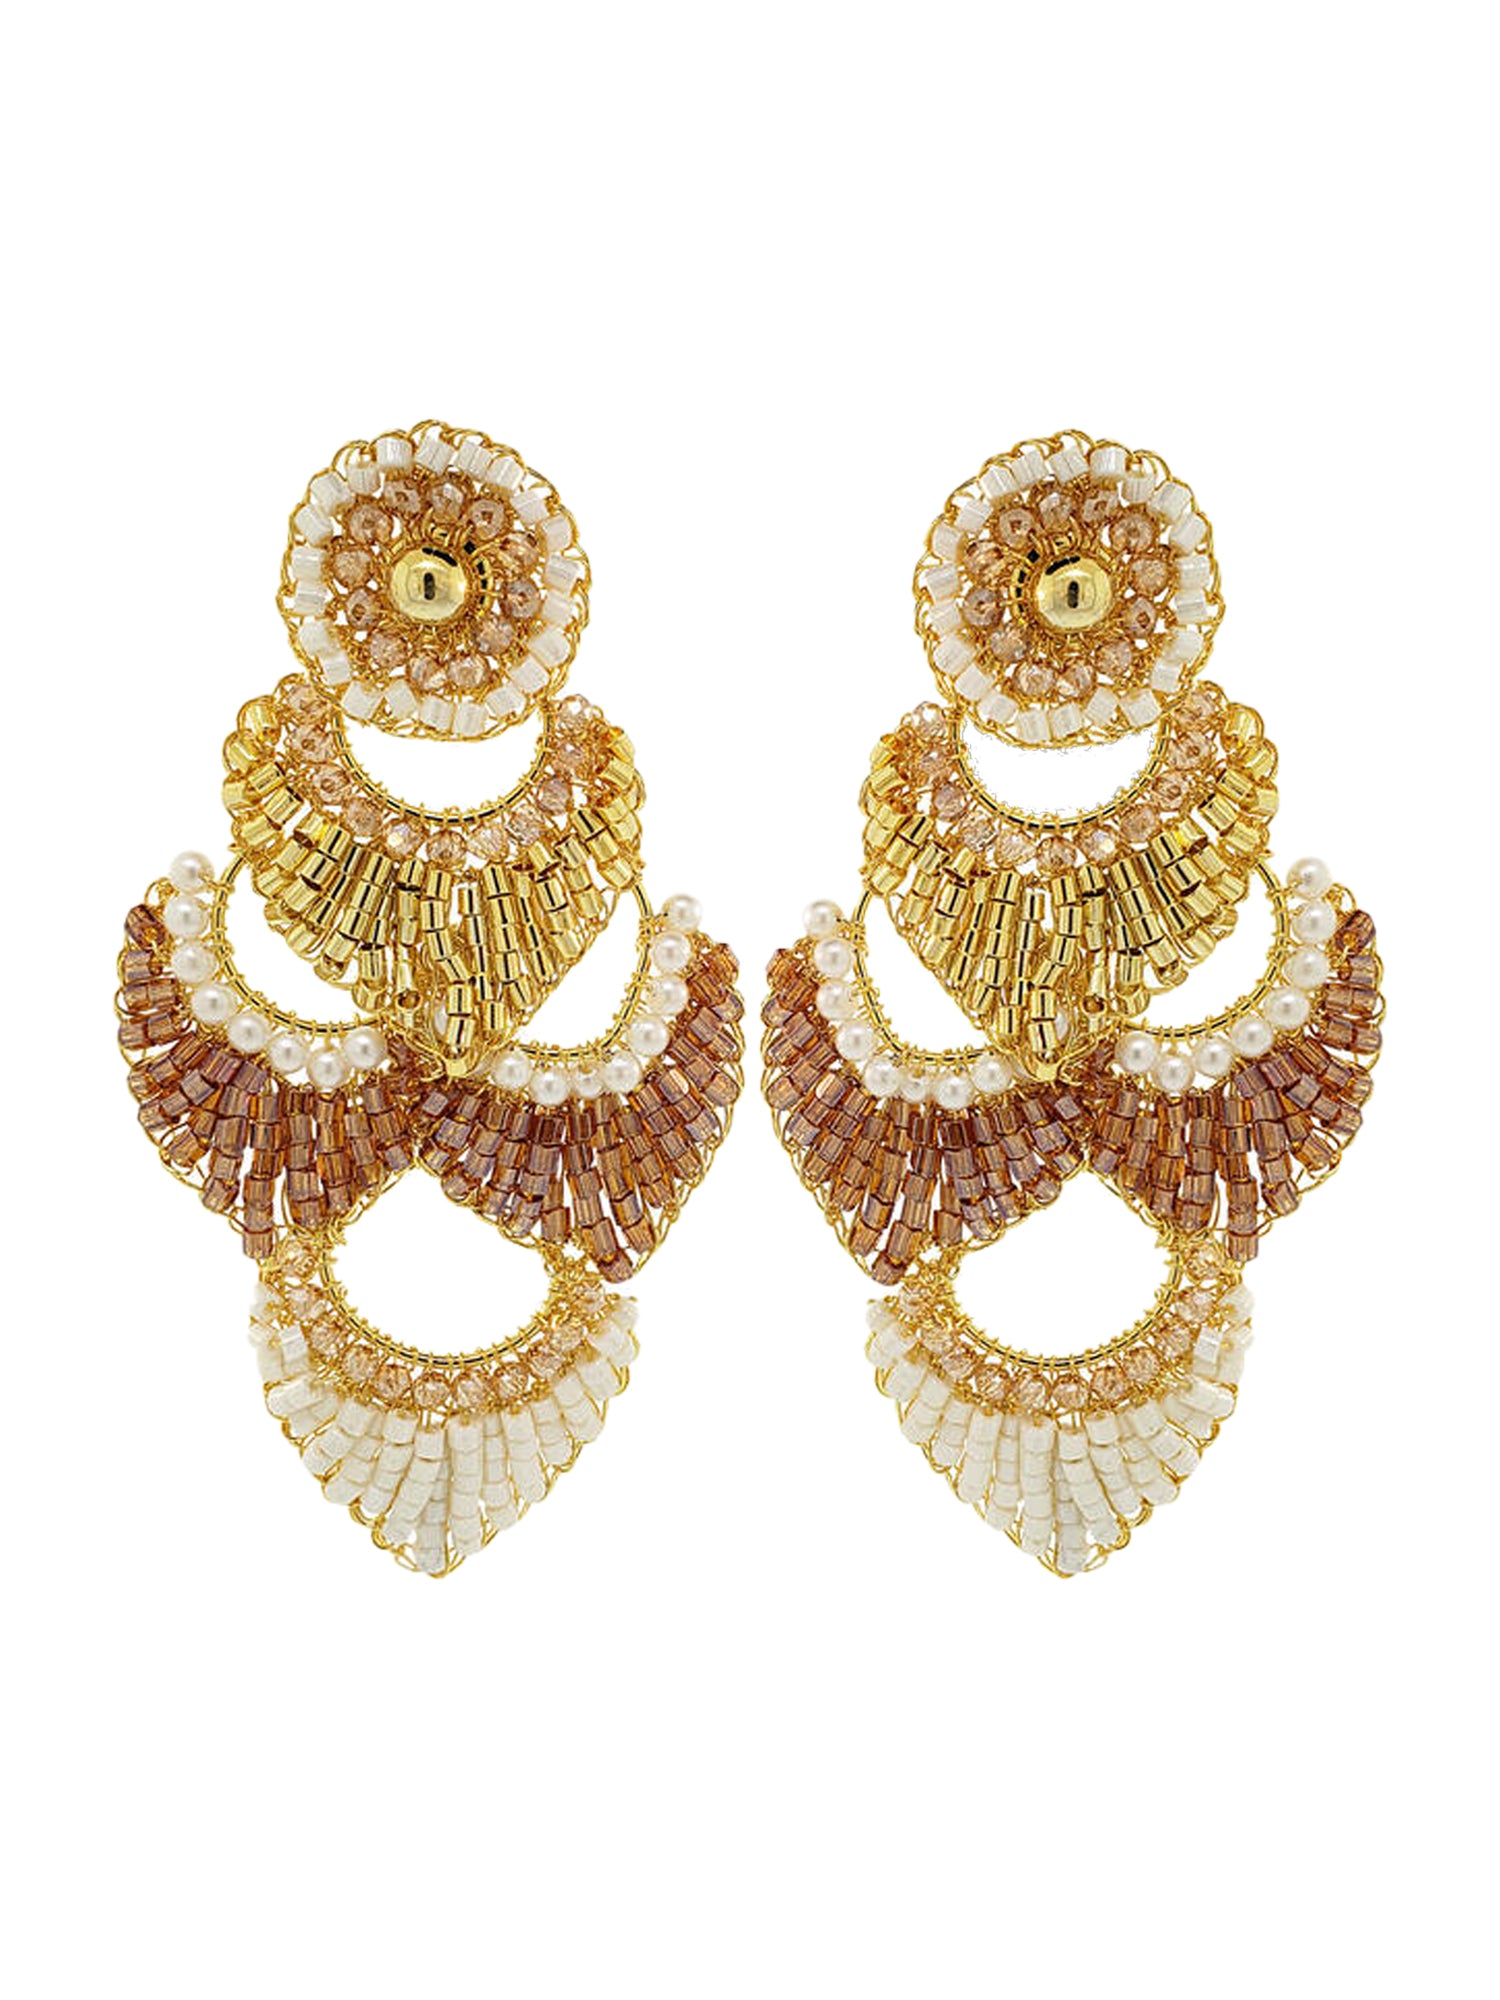 Siren Chandeliers Earrings - Golden